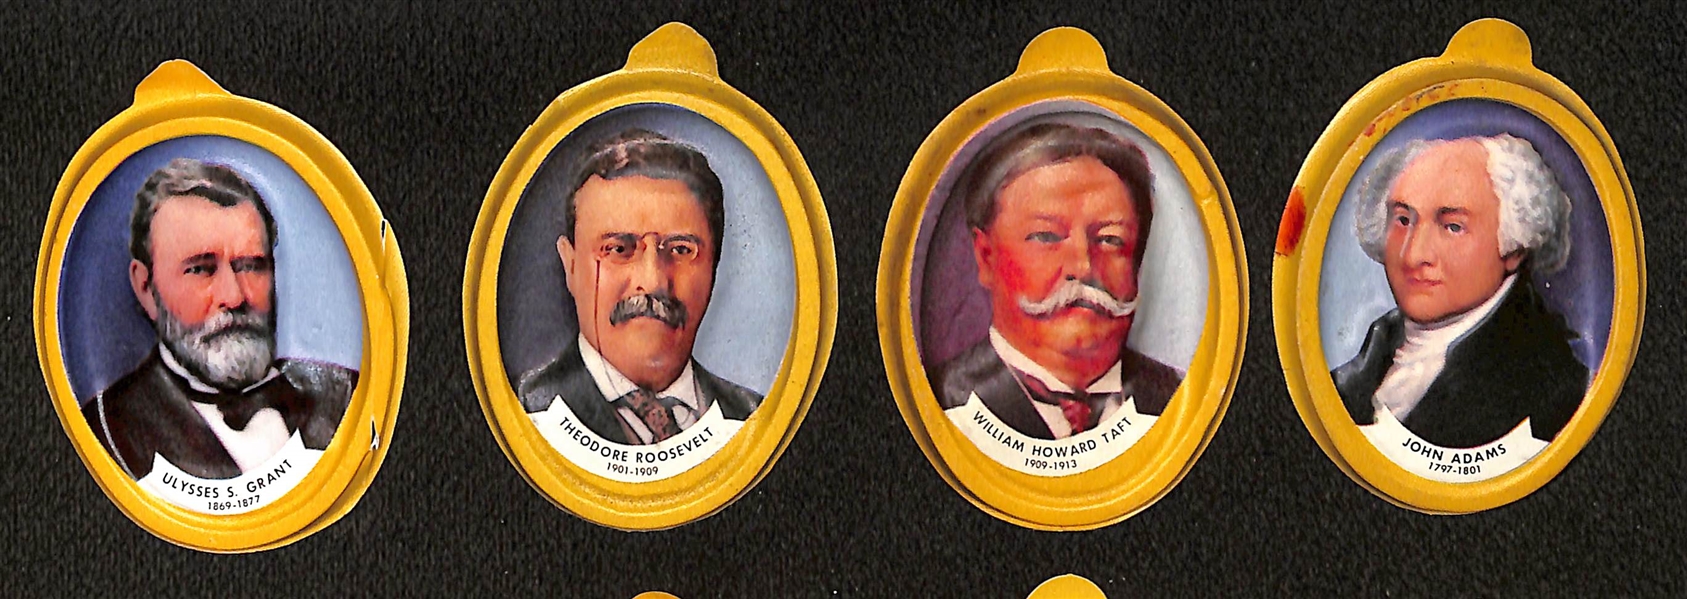 Lot of (12) Vintage Mini Plastic Presidential Plaques w. Ulysses S. Grant